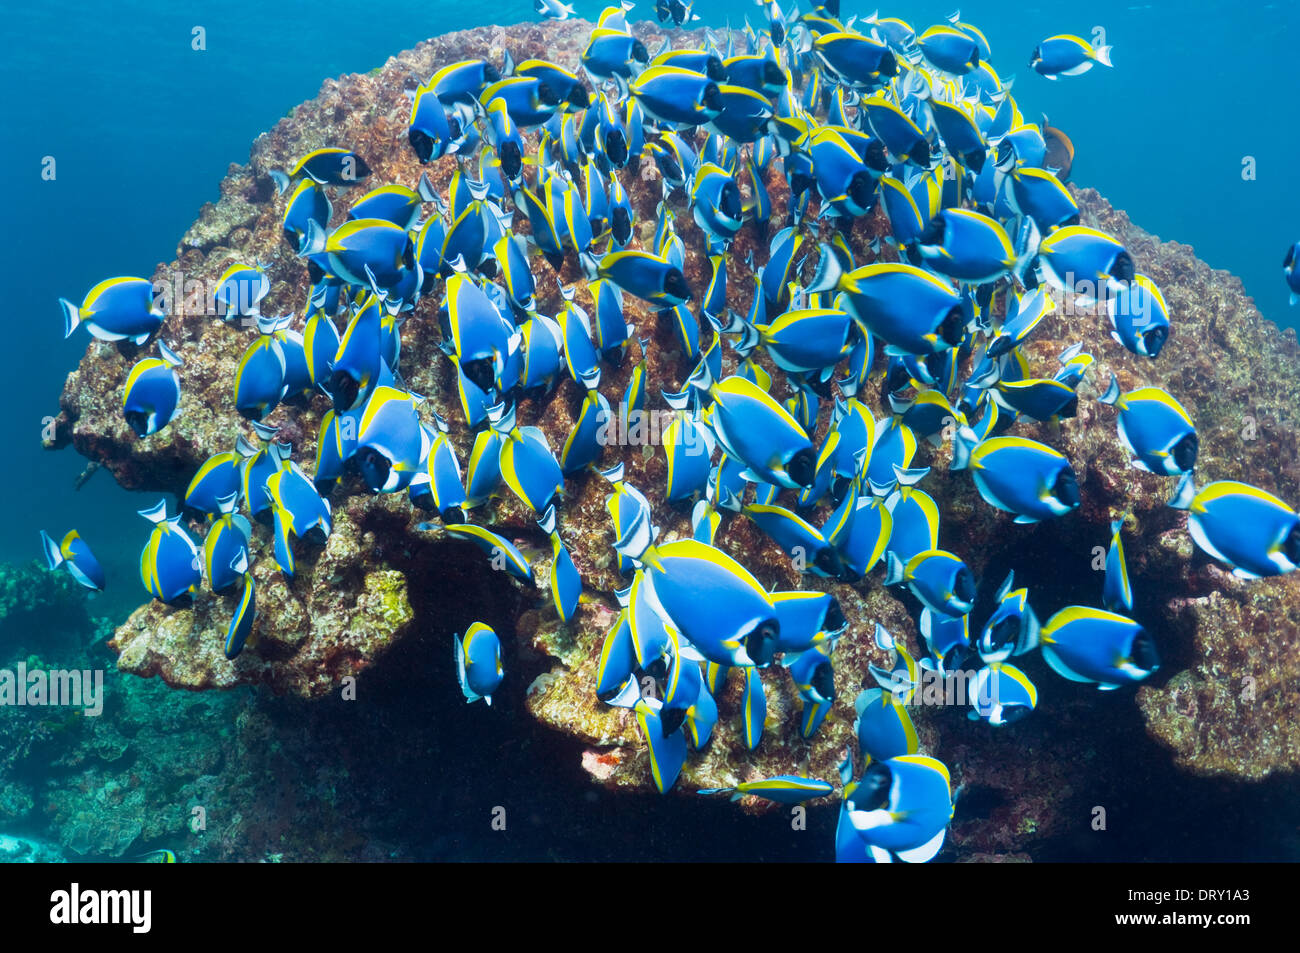 El Pez Cirujano azul de polvo (Acanthurus leucosternon), alimentación escolar grande de algas en rocas de coral. Mar de Andamán, Tailandia. Foto de stock